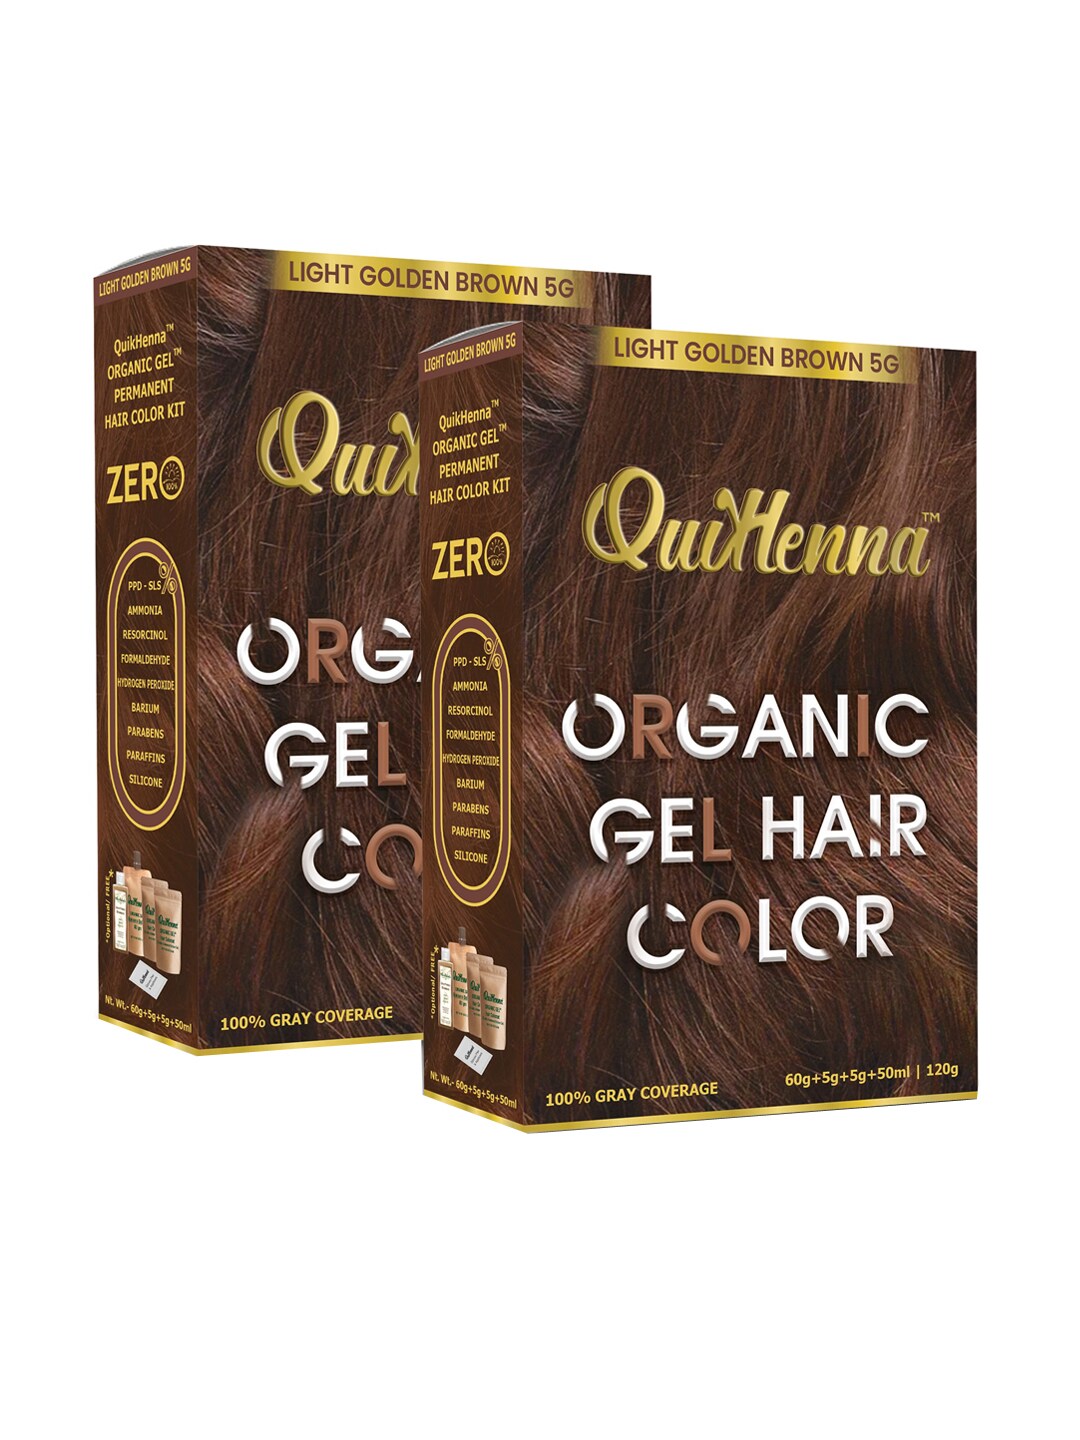 QUIKHENNA Set Of 2 Damage Free Organic Gel Hair Color 240gm Price in India